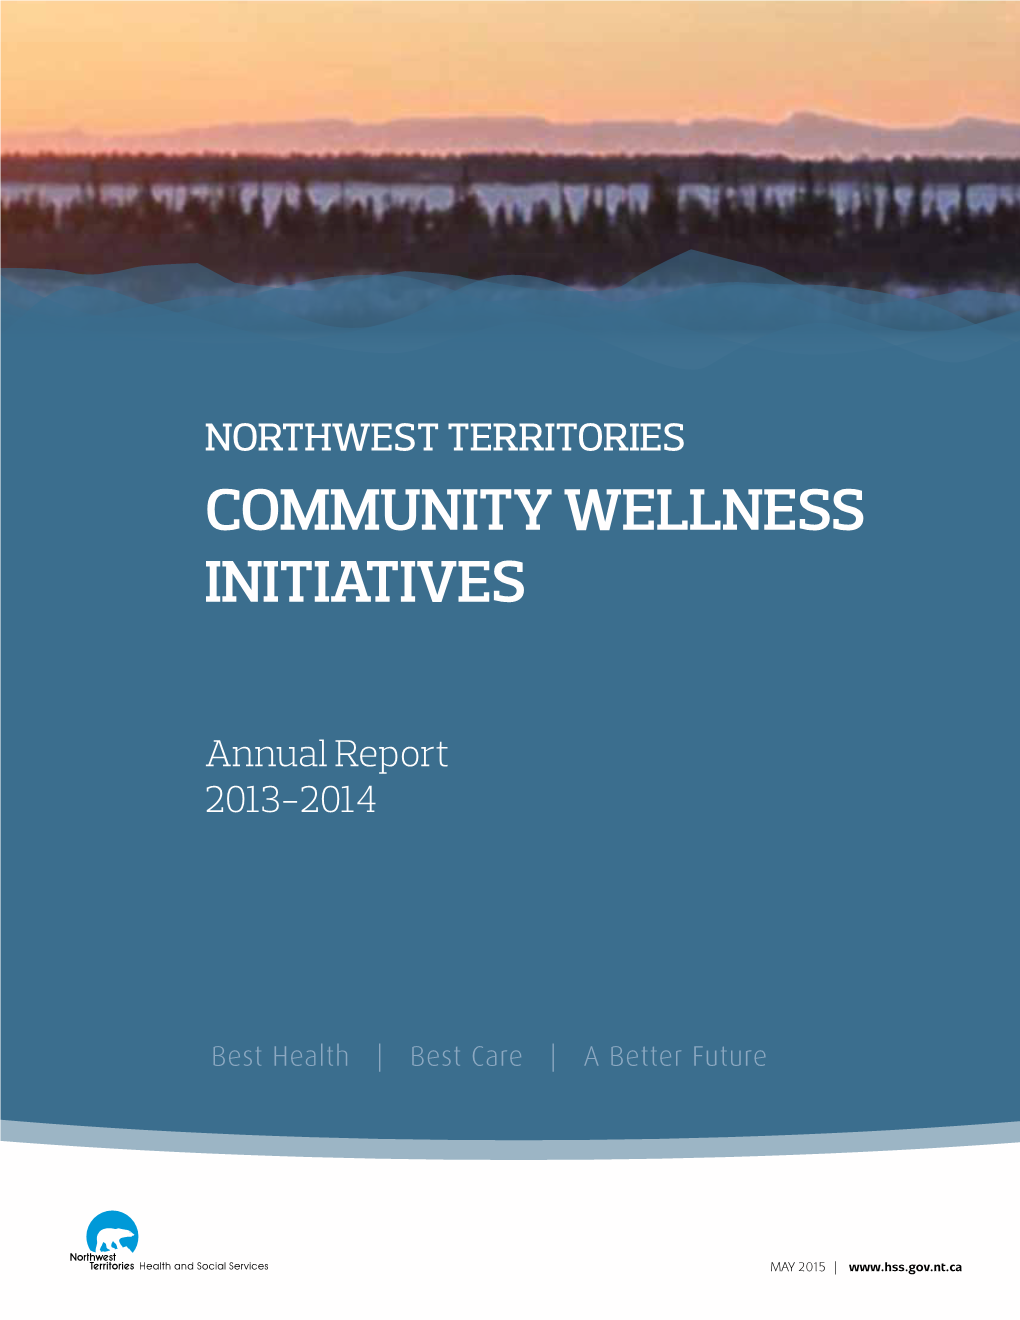 NWT Community Wellness Initiatives Report 2013-2014